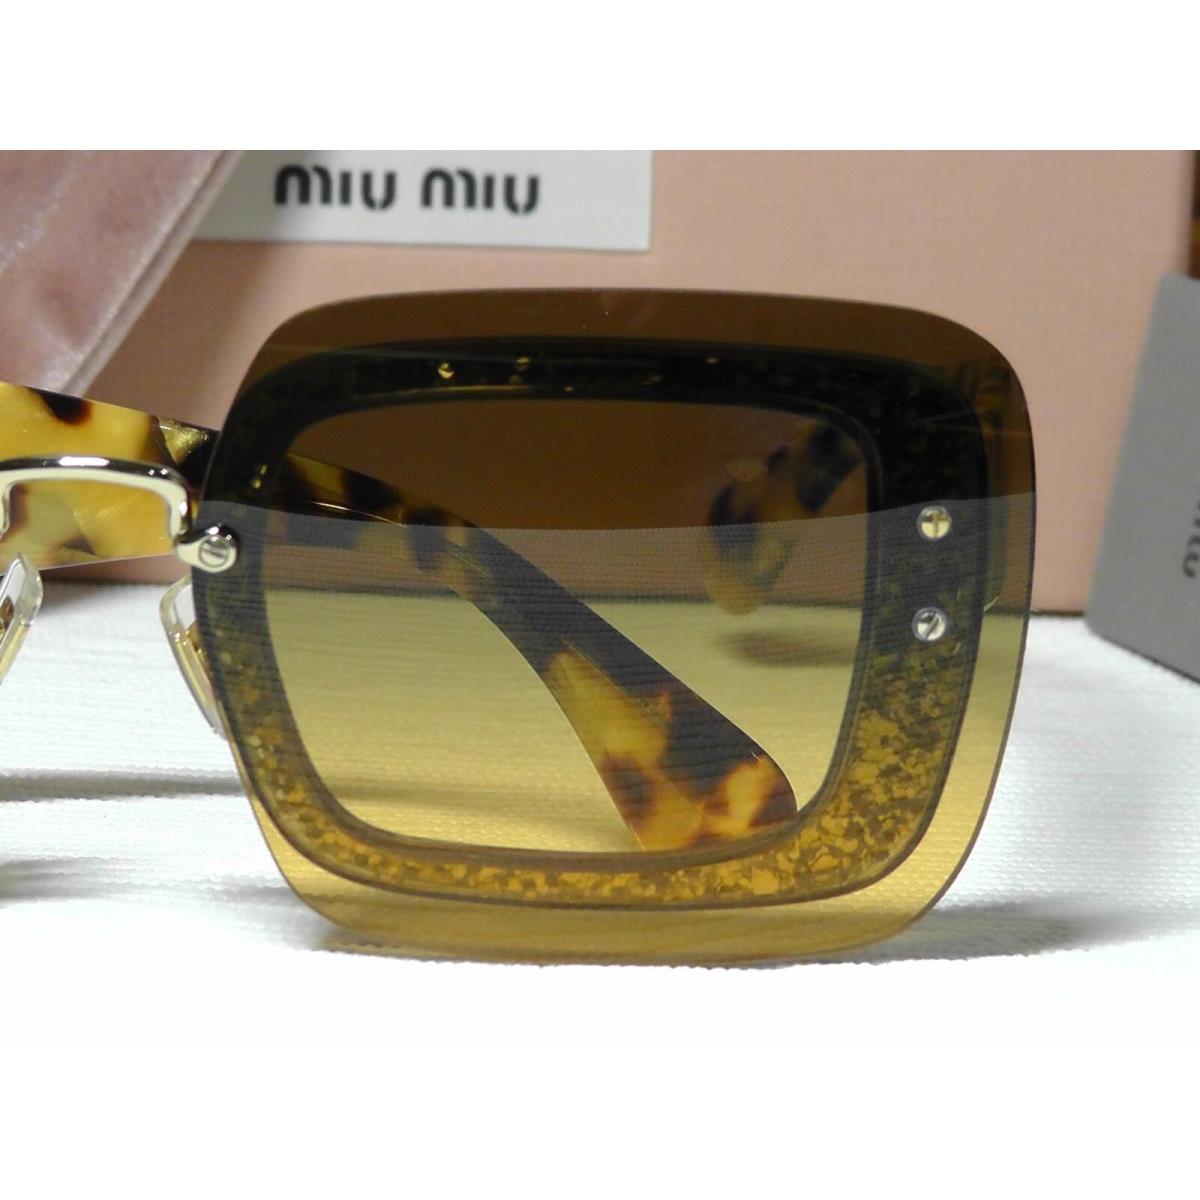 Miu Miu sunglasses  - Light Havana Frame, Gray / Yellow Lens 9